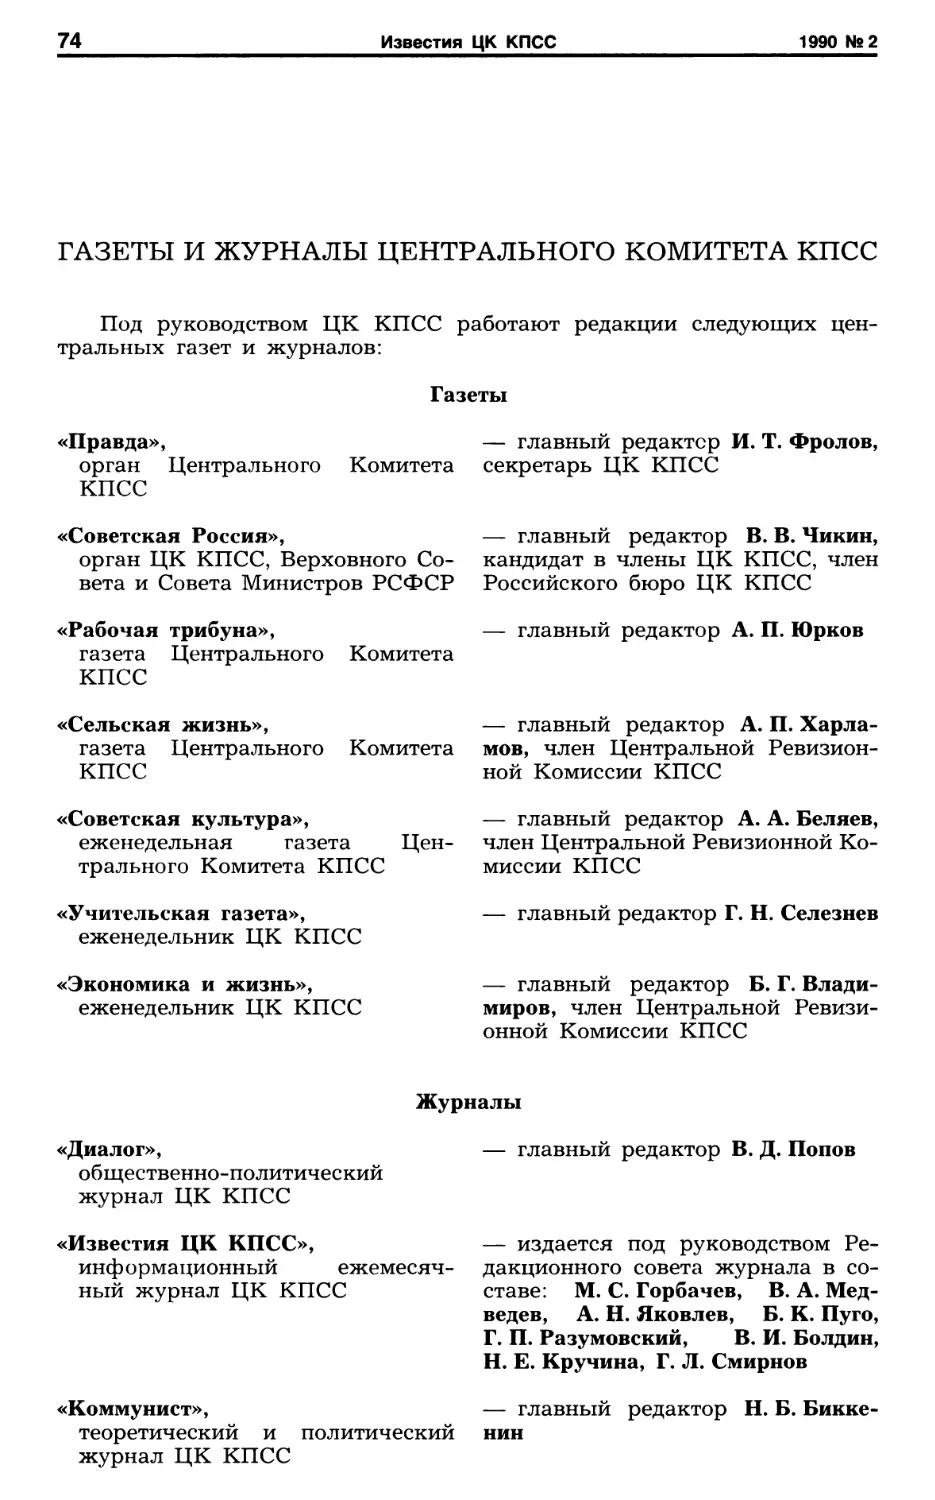 Газеты и журналы ЦК КПСС